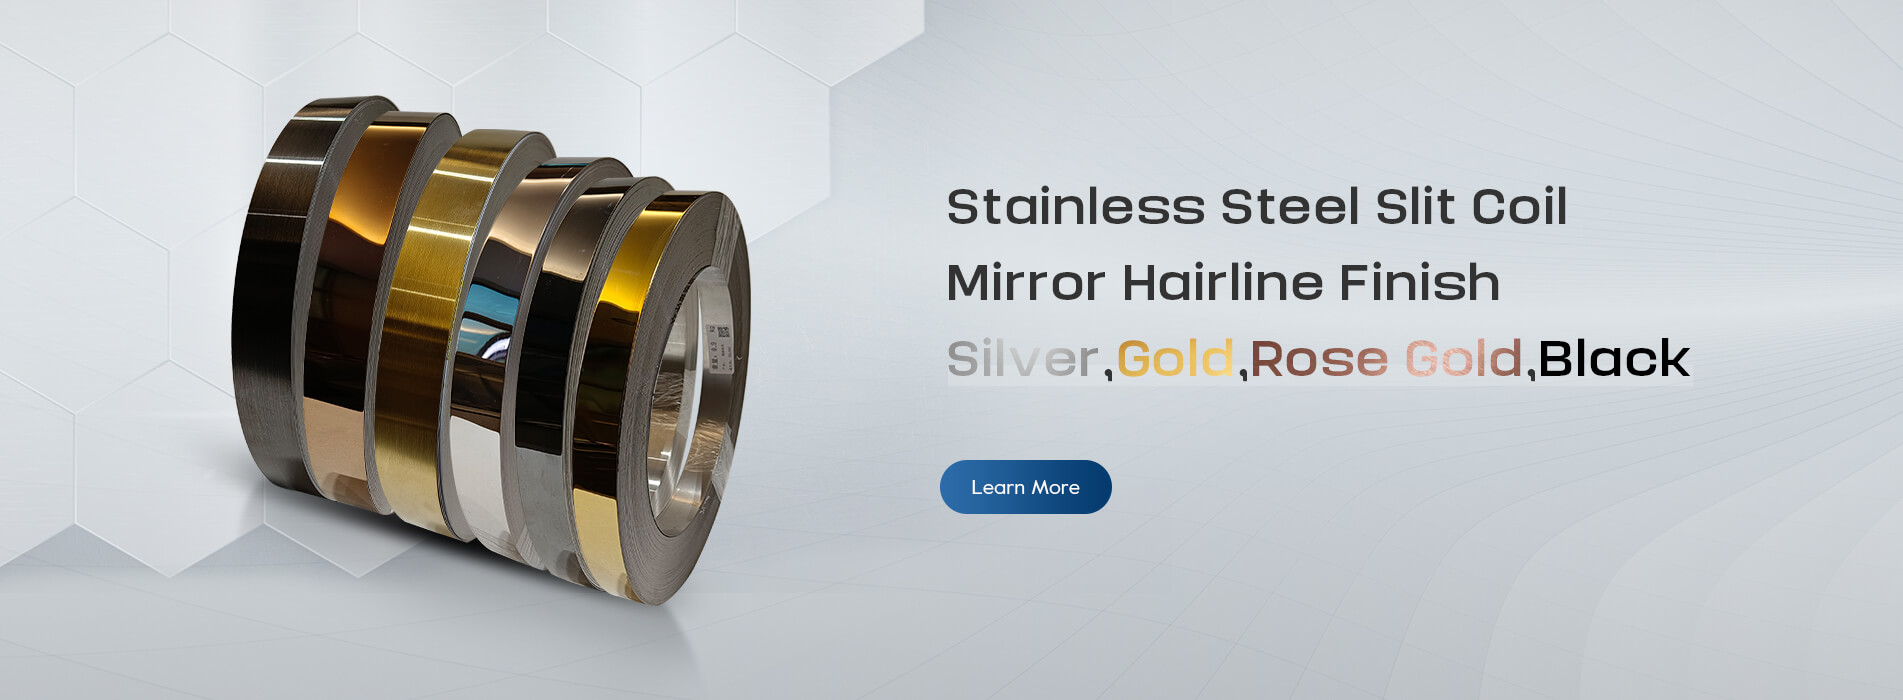 Stainless Steel Slit Coil